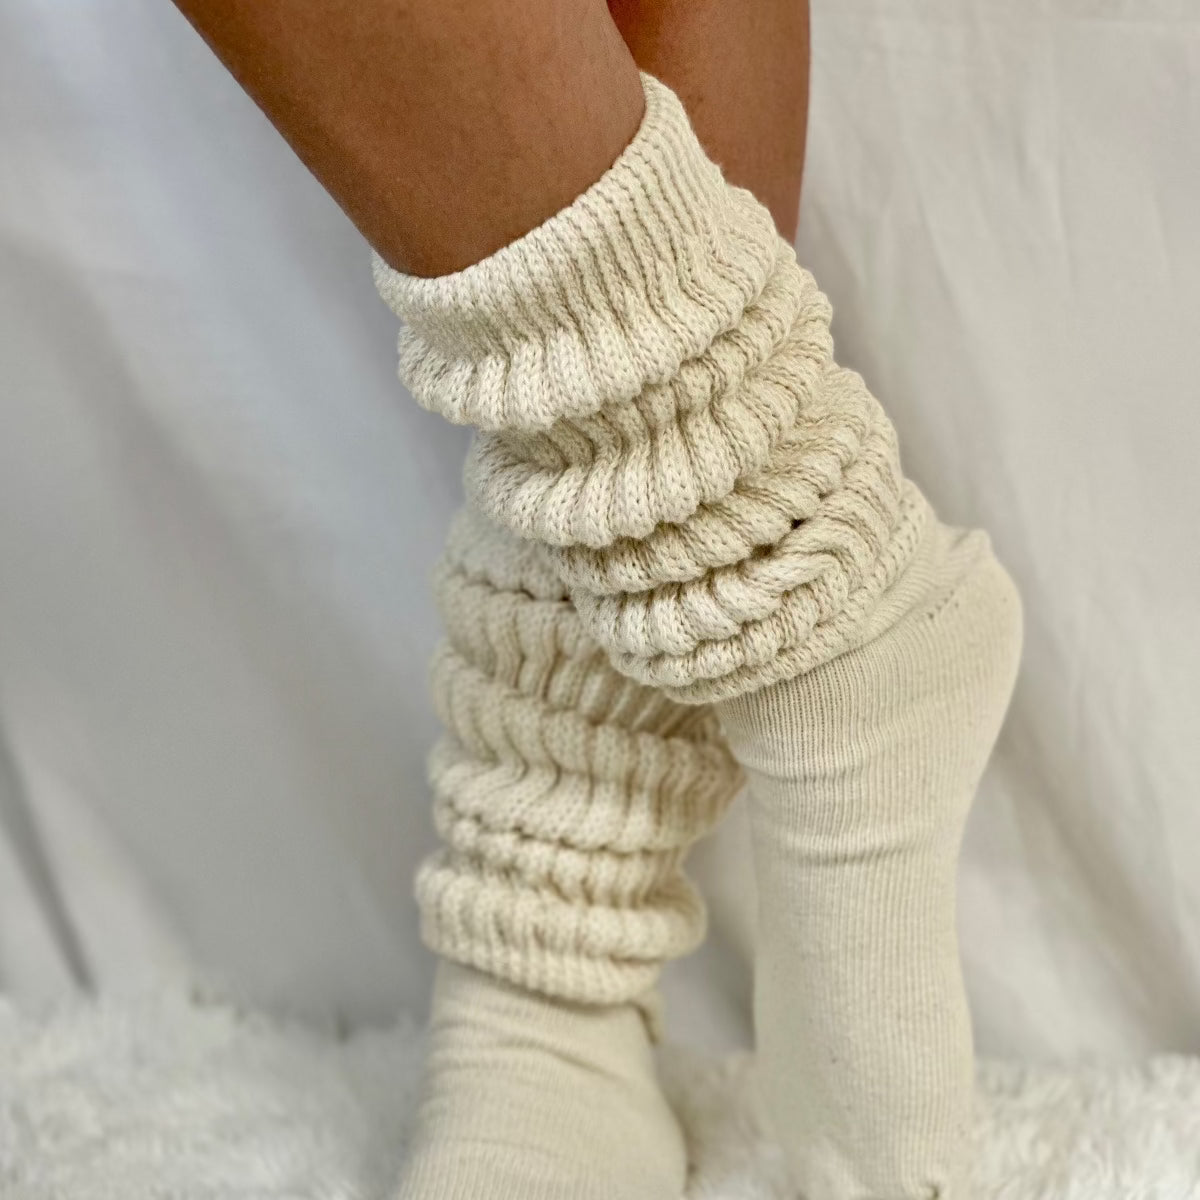 Eloise USA Adult Slouch Socks 100% Cotton